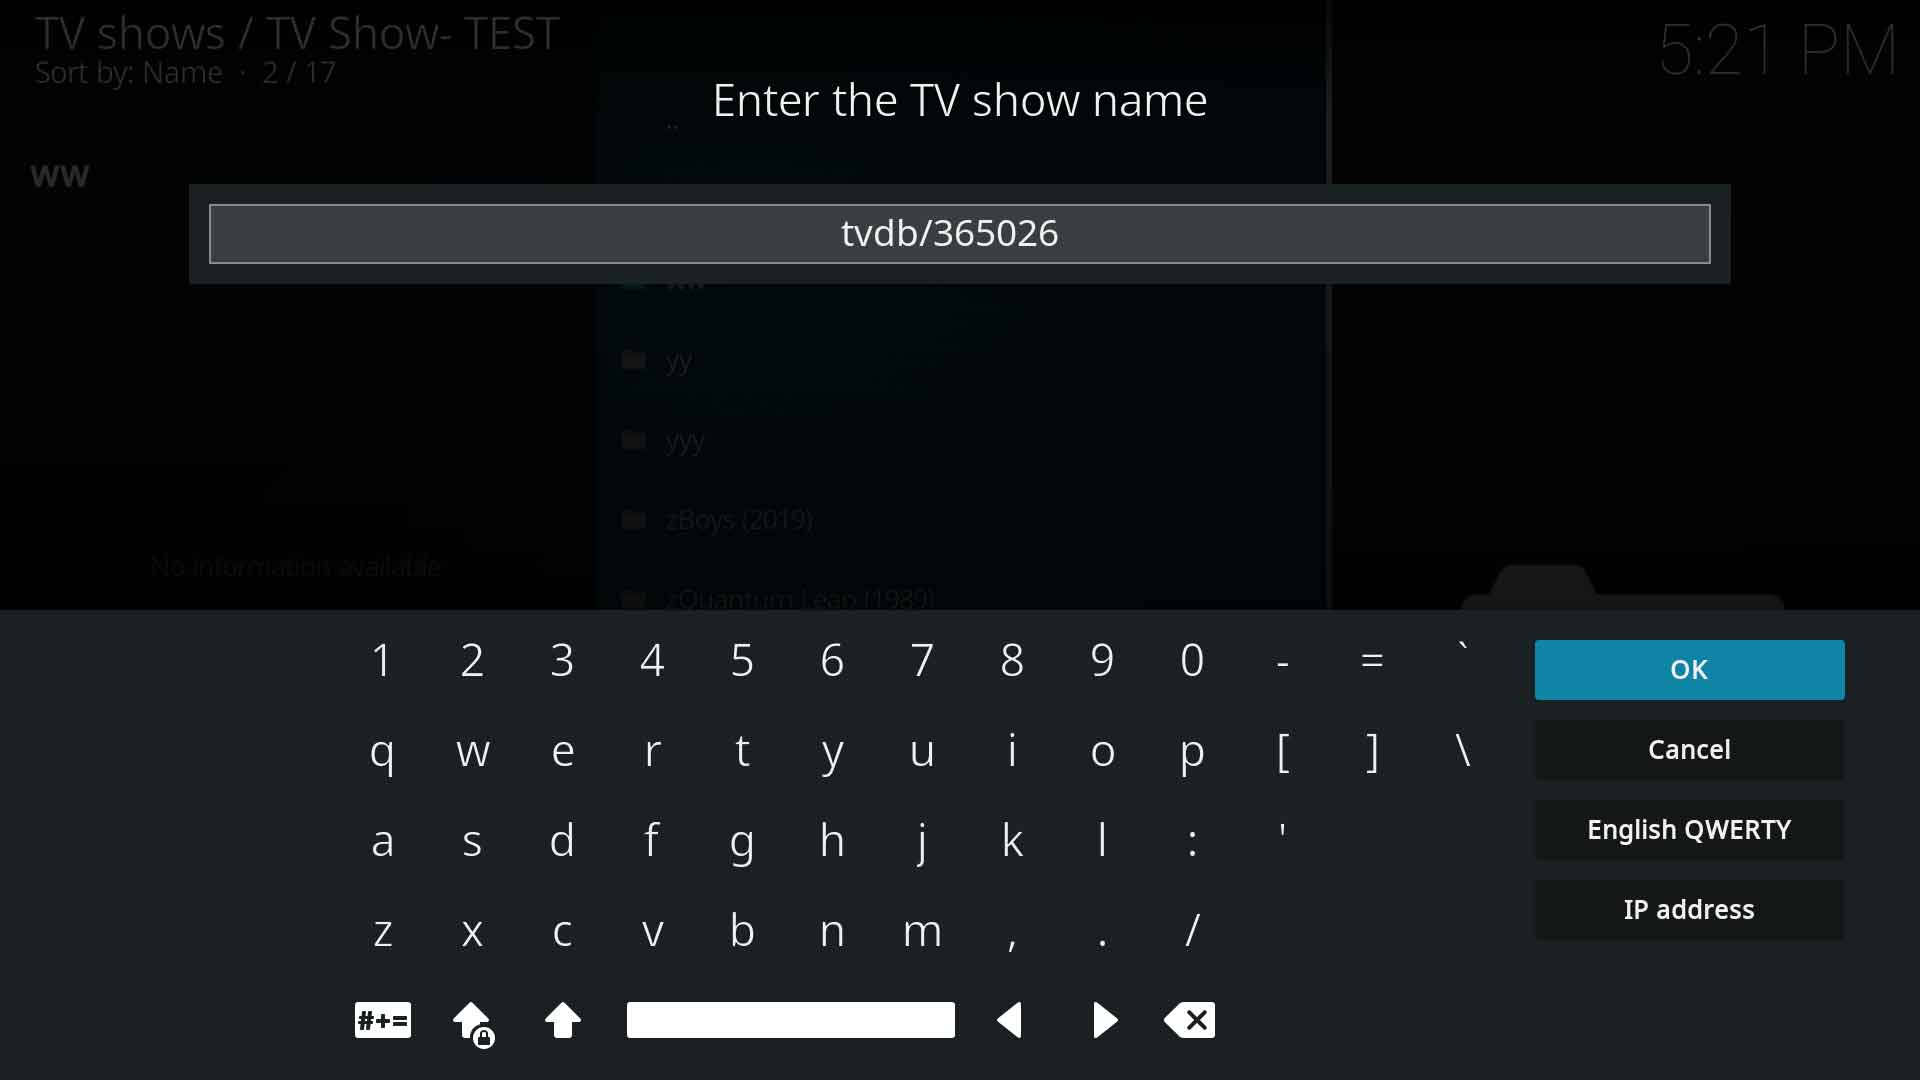 Image 3- If using the TVDB ID, enter it as shown using the tvdb/ prefix, then press OK